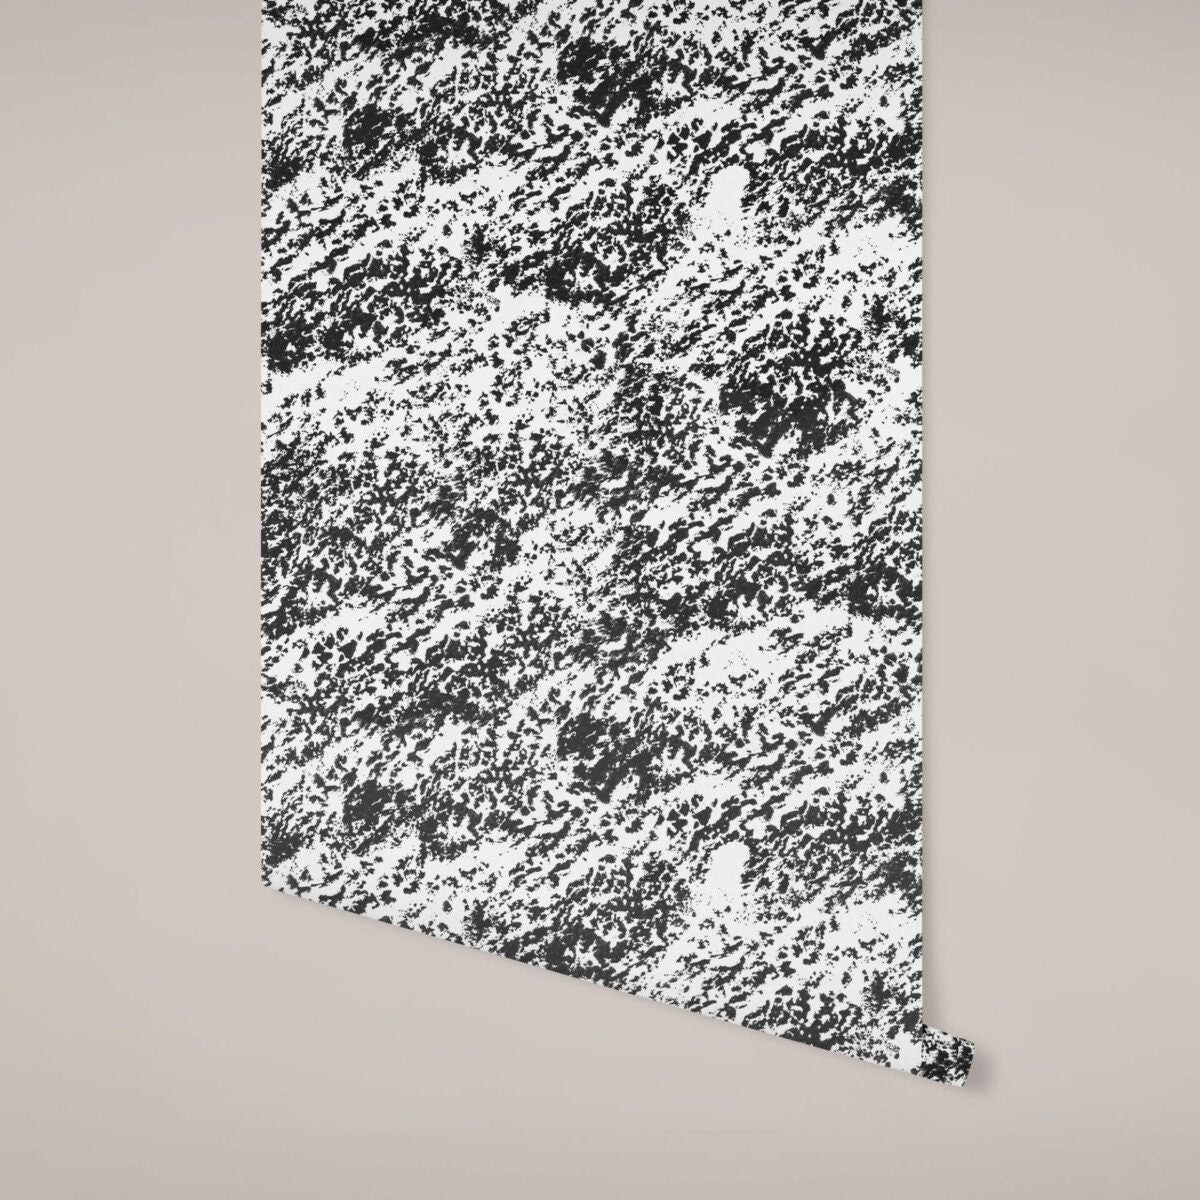 Sponge XXXII, Surface Design